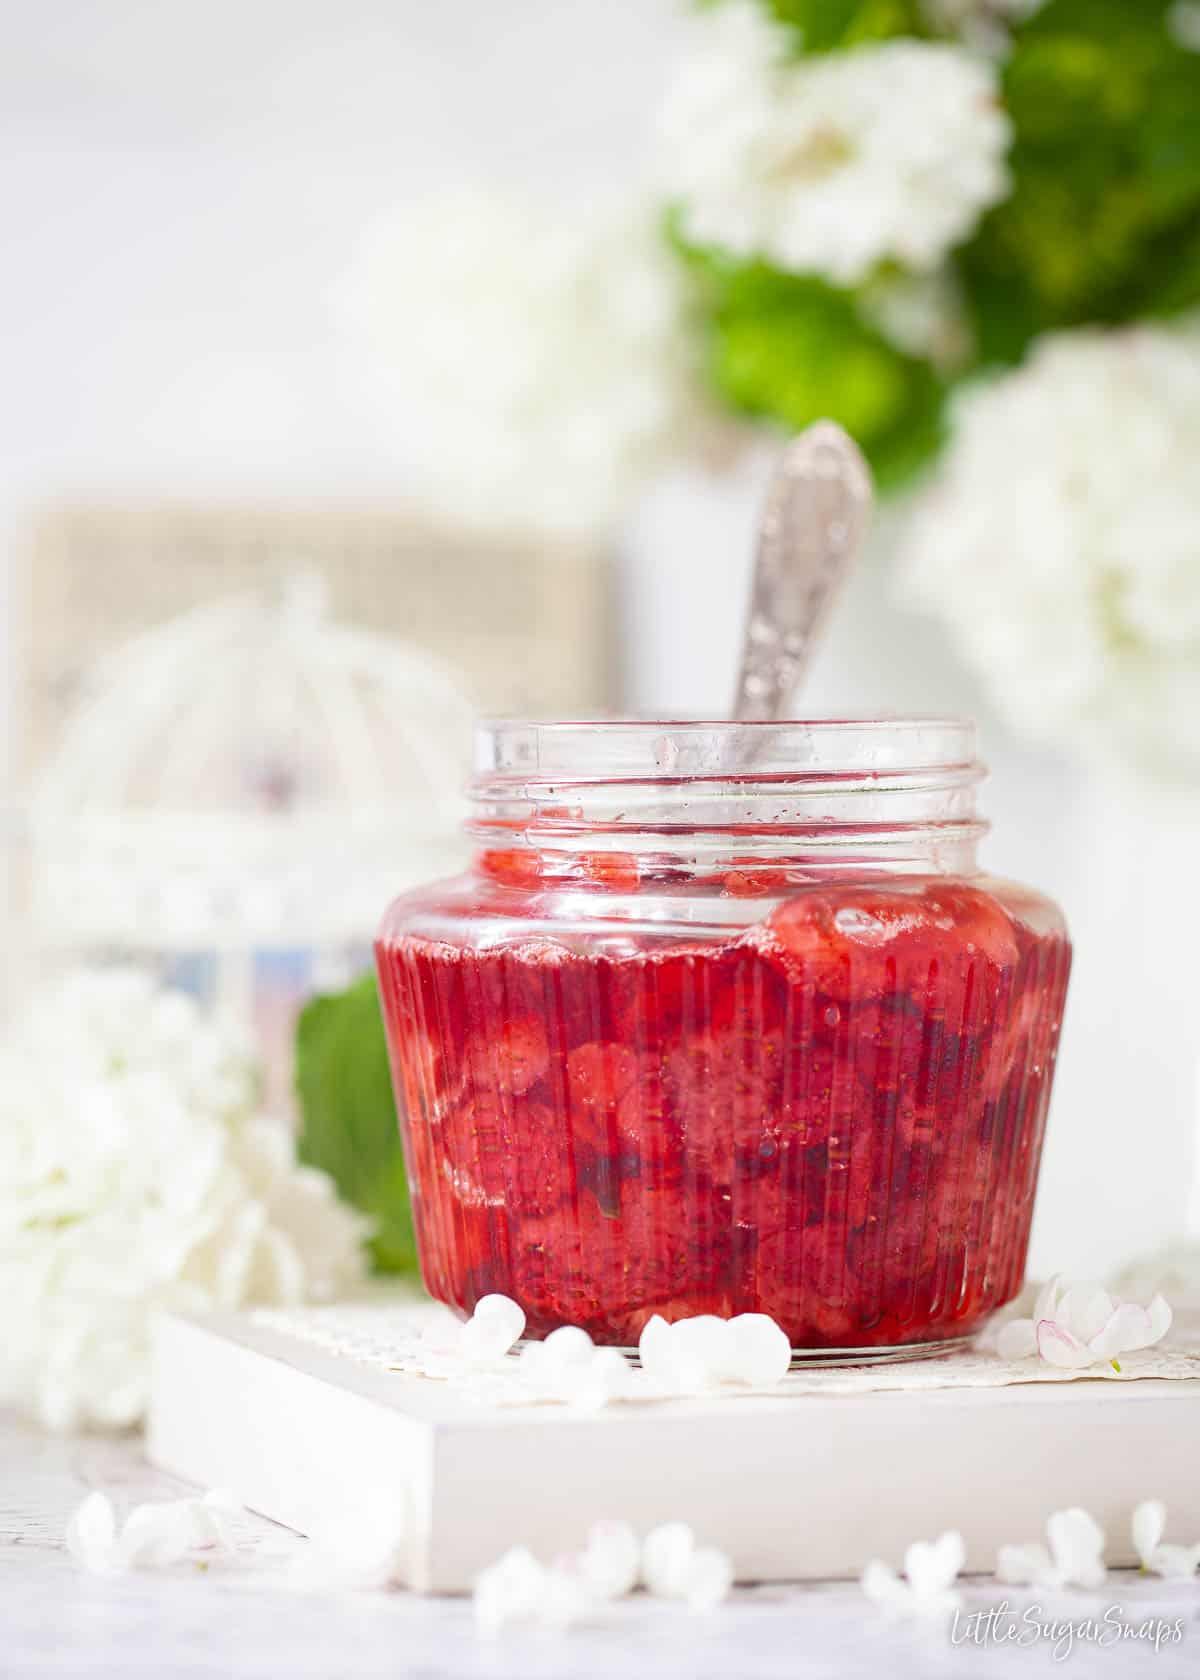 A jar of strawberry sauce.